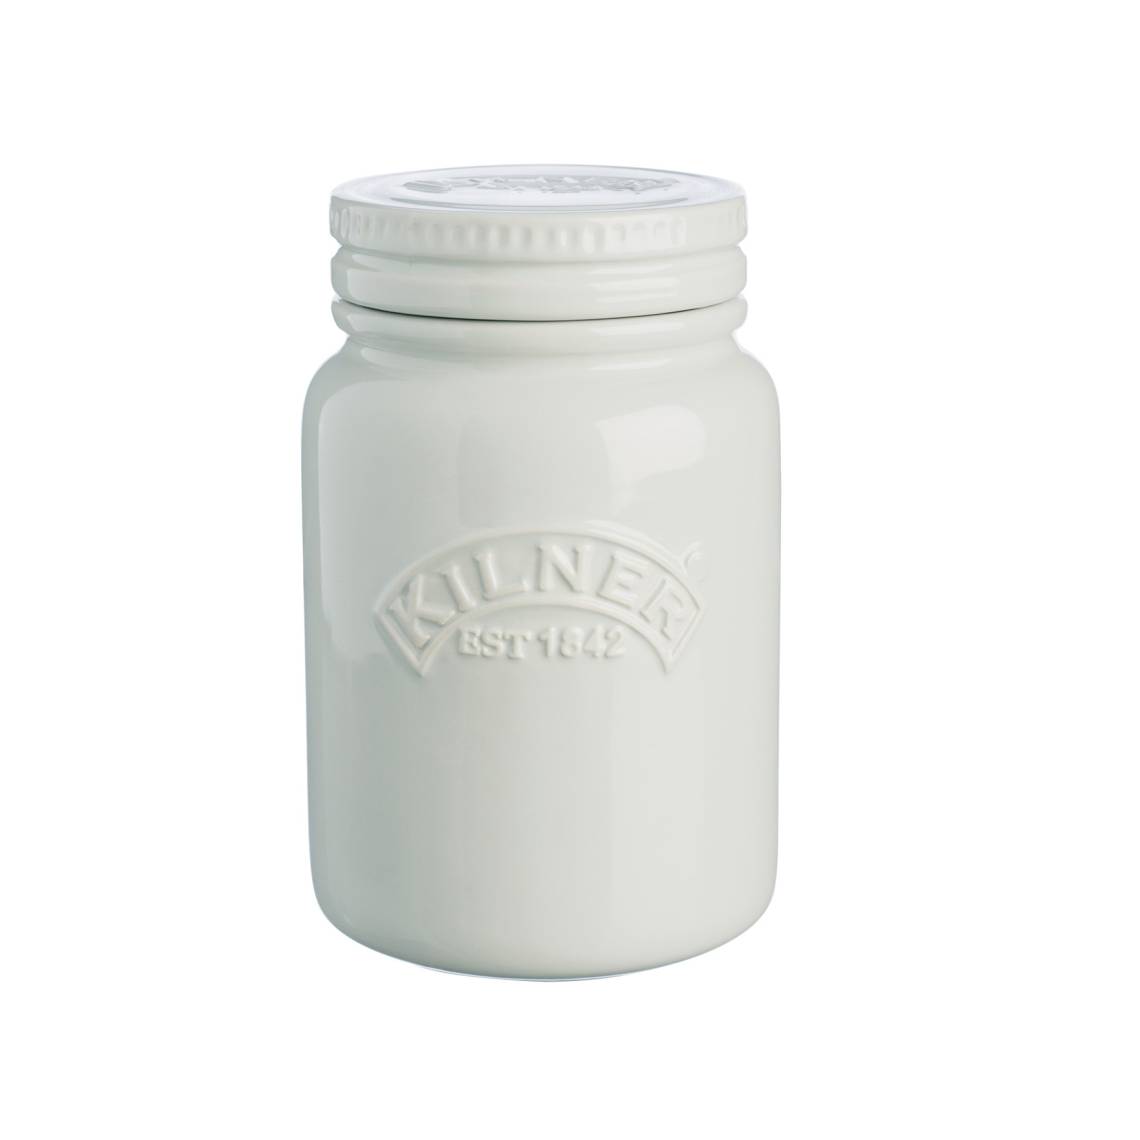 Kilner - Keramik-Vorratsglas Weiß, 600 ml